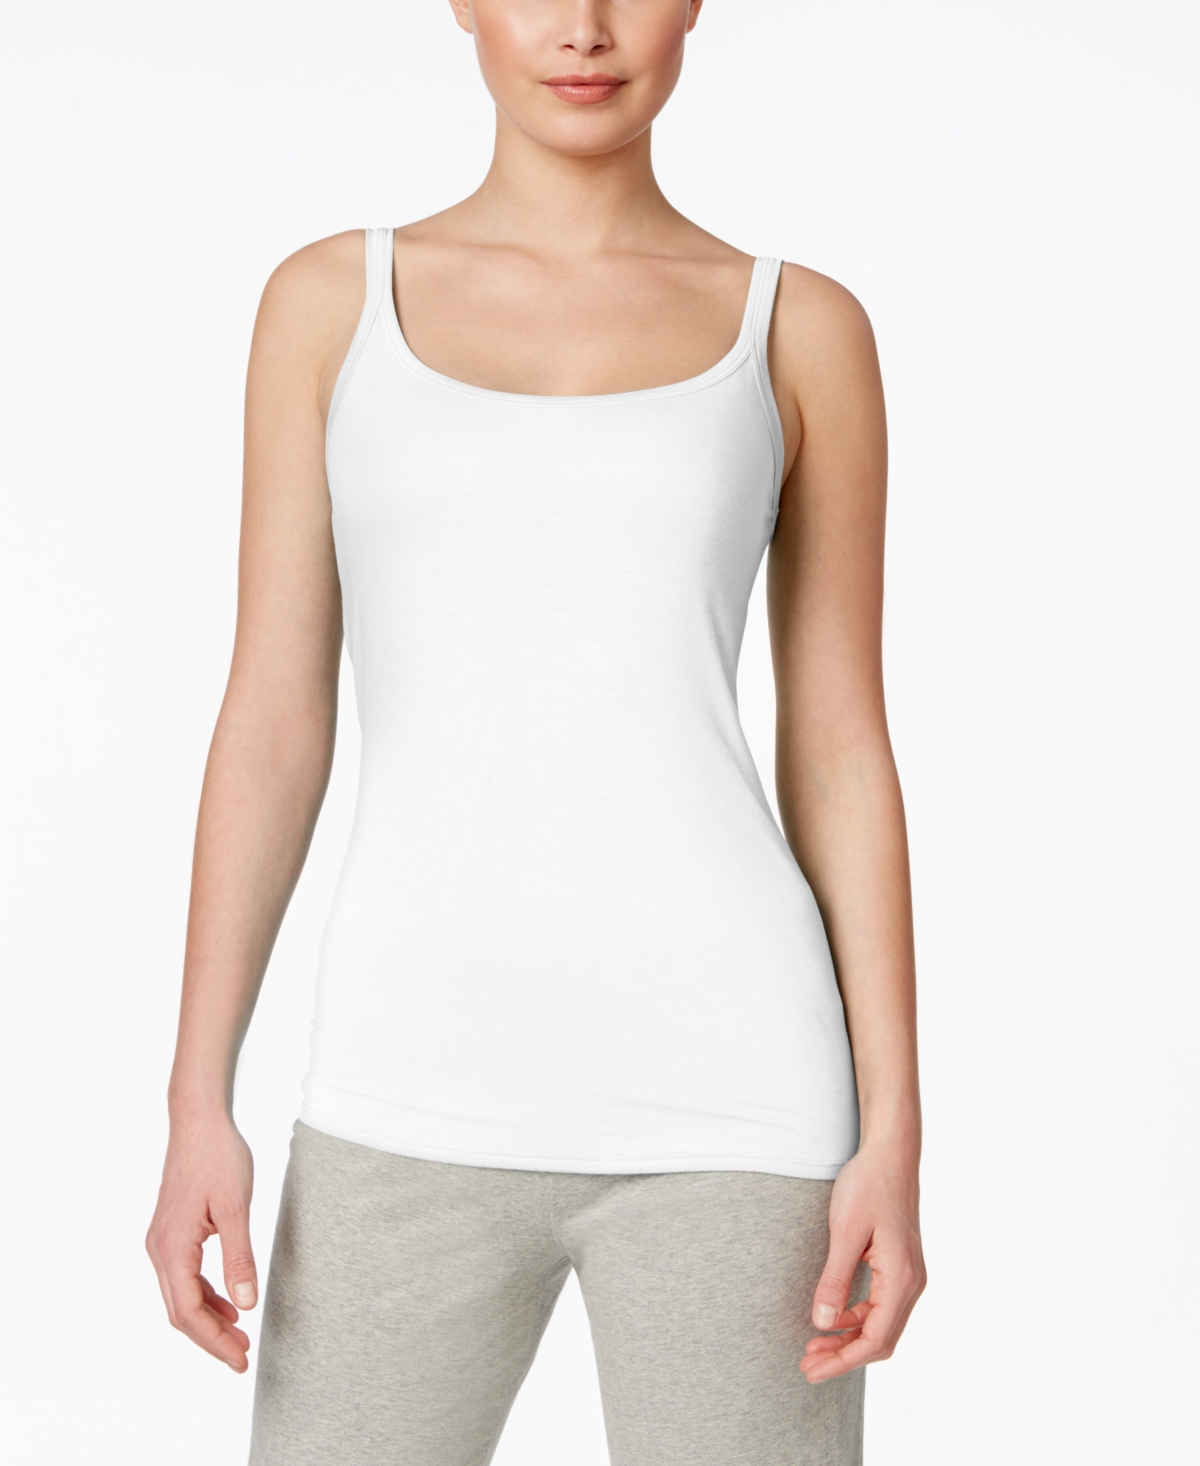 Women's Super Soft Breathable Camisole 2074 - White